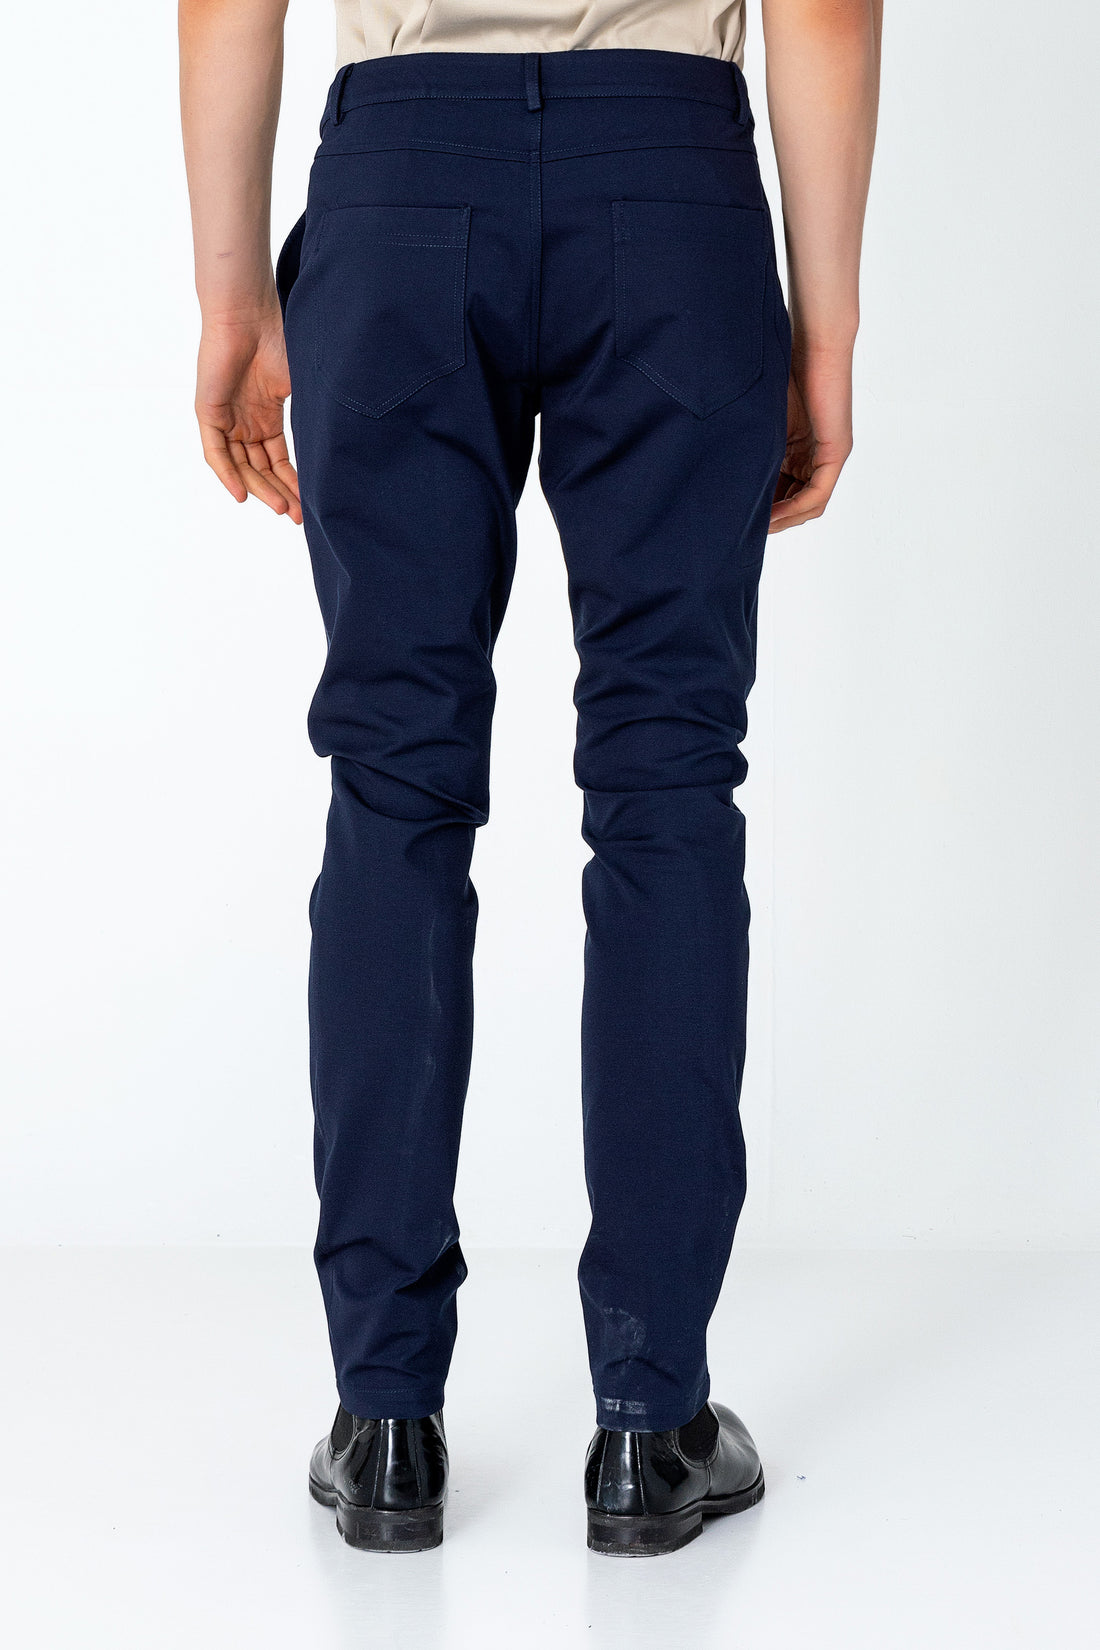 Casual Wear Pants - Navy